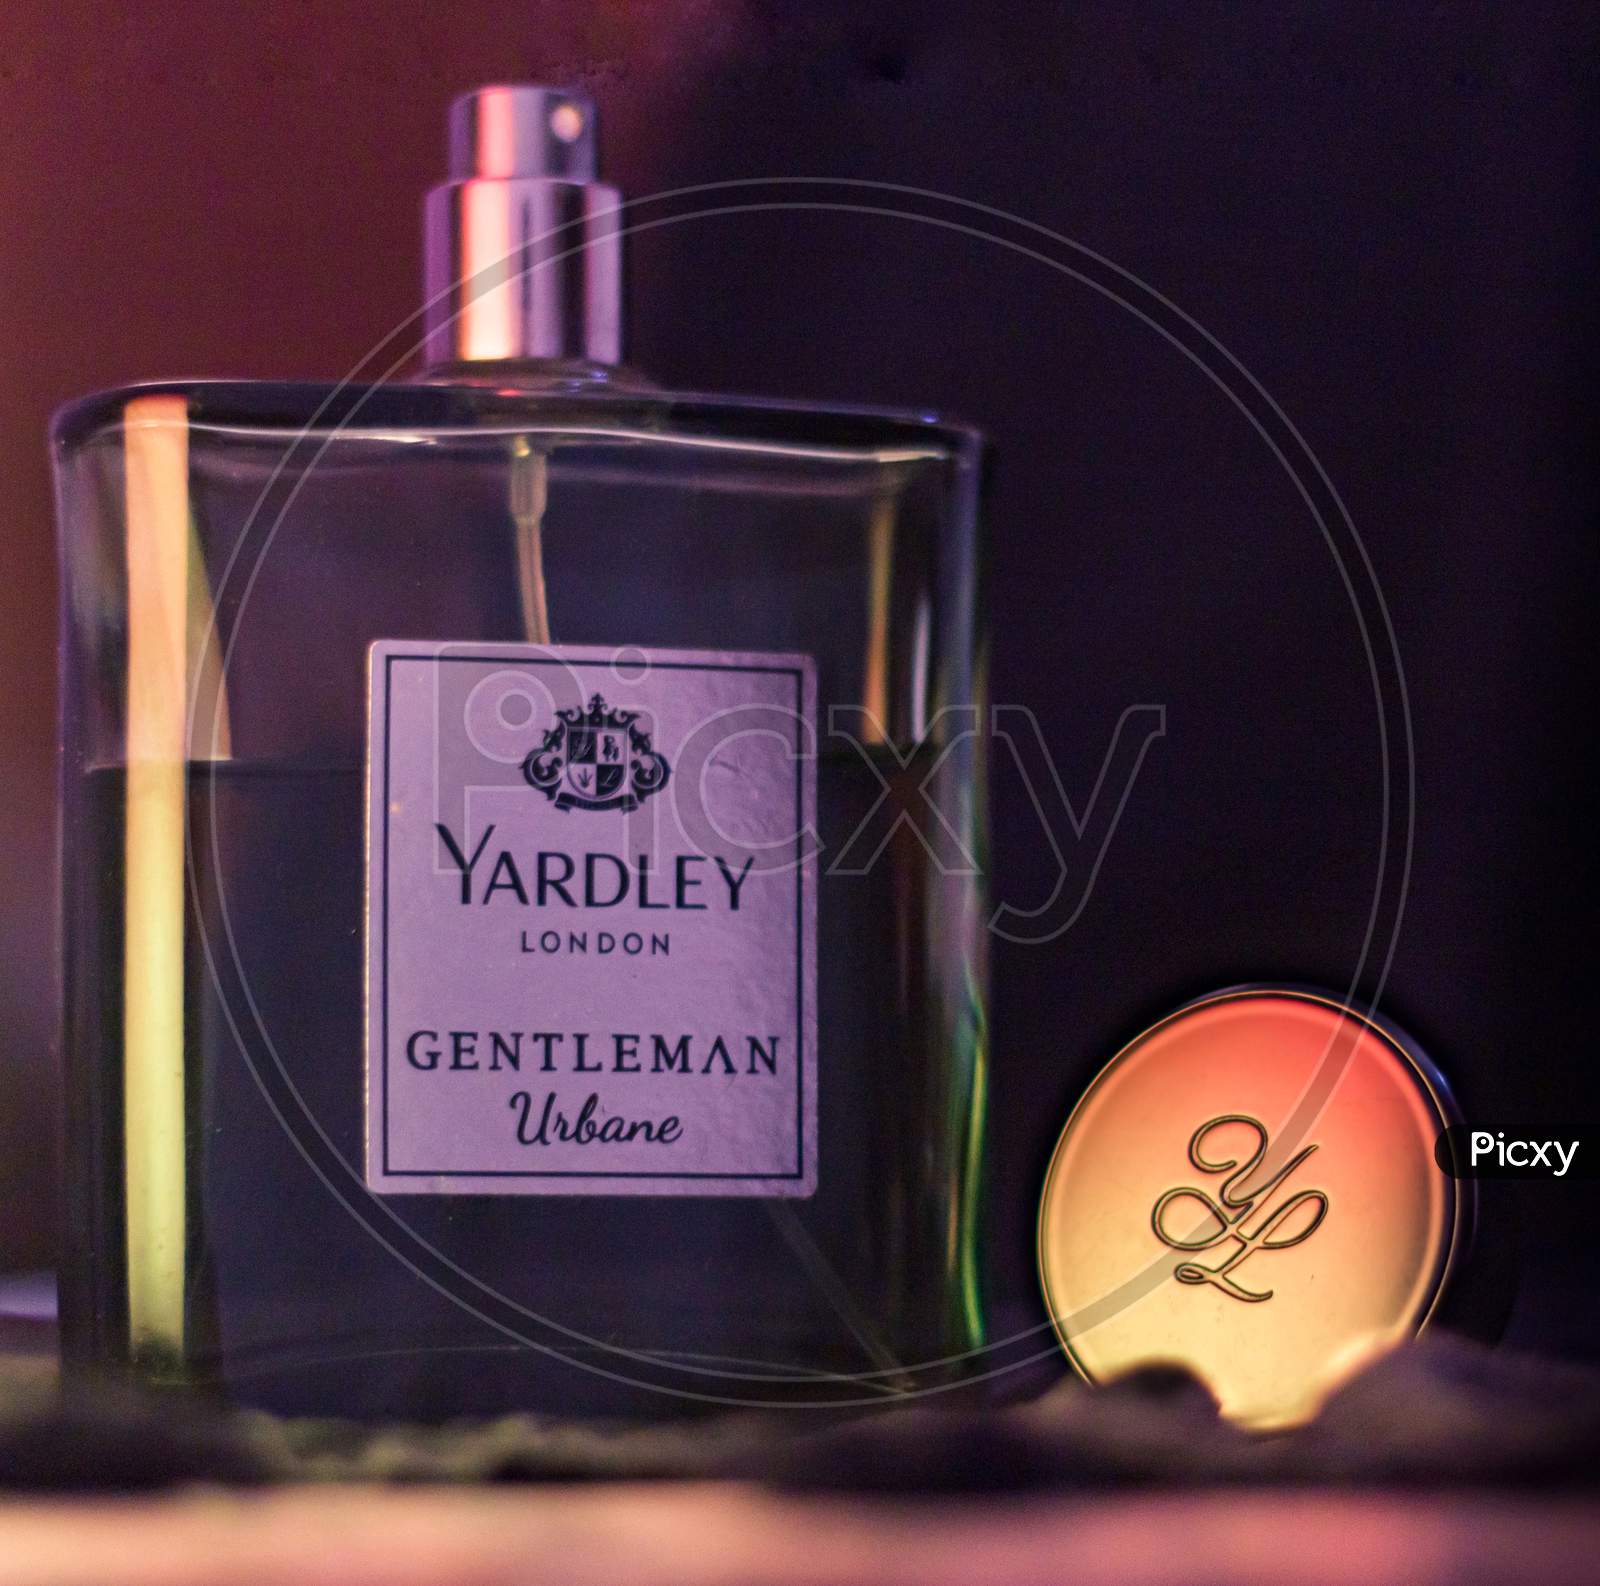 Product photography of Yardley perfume.